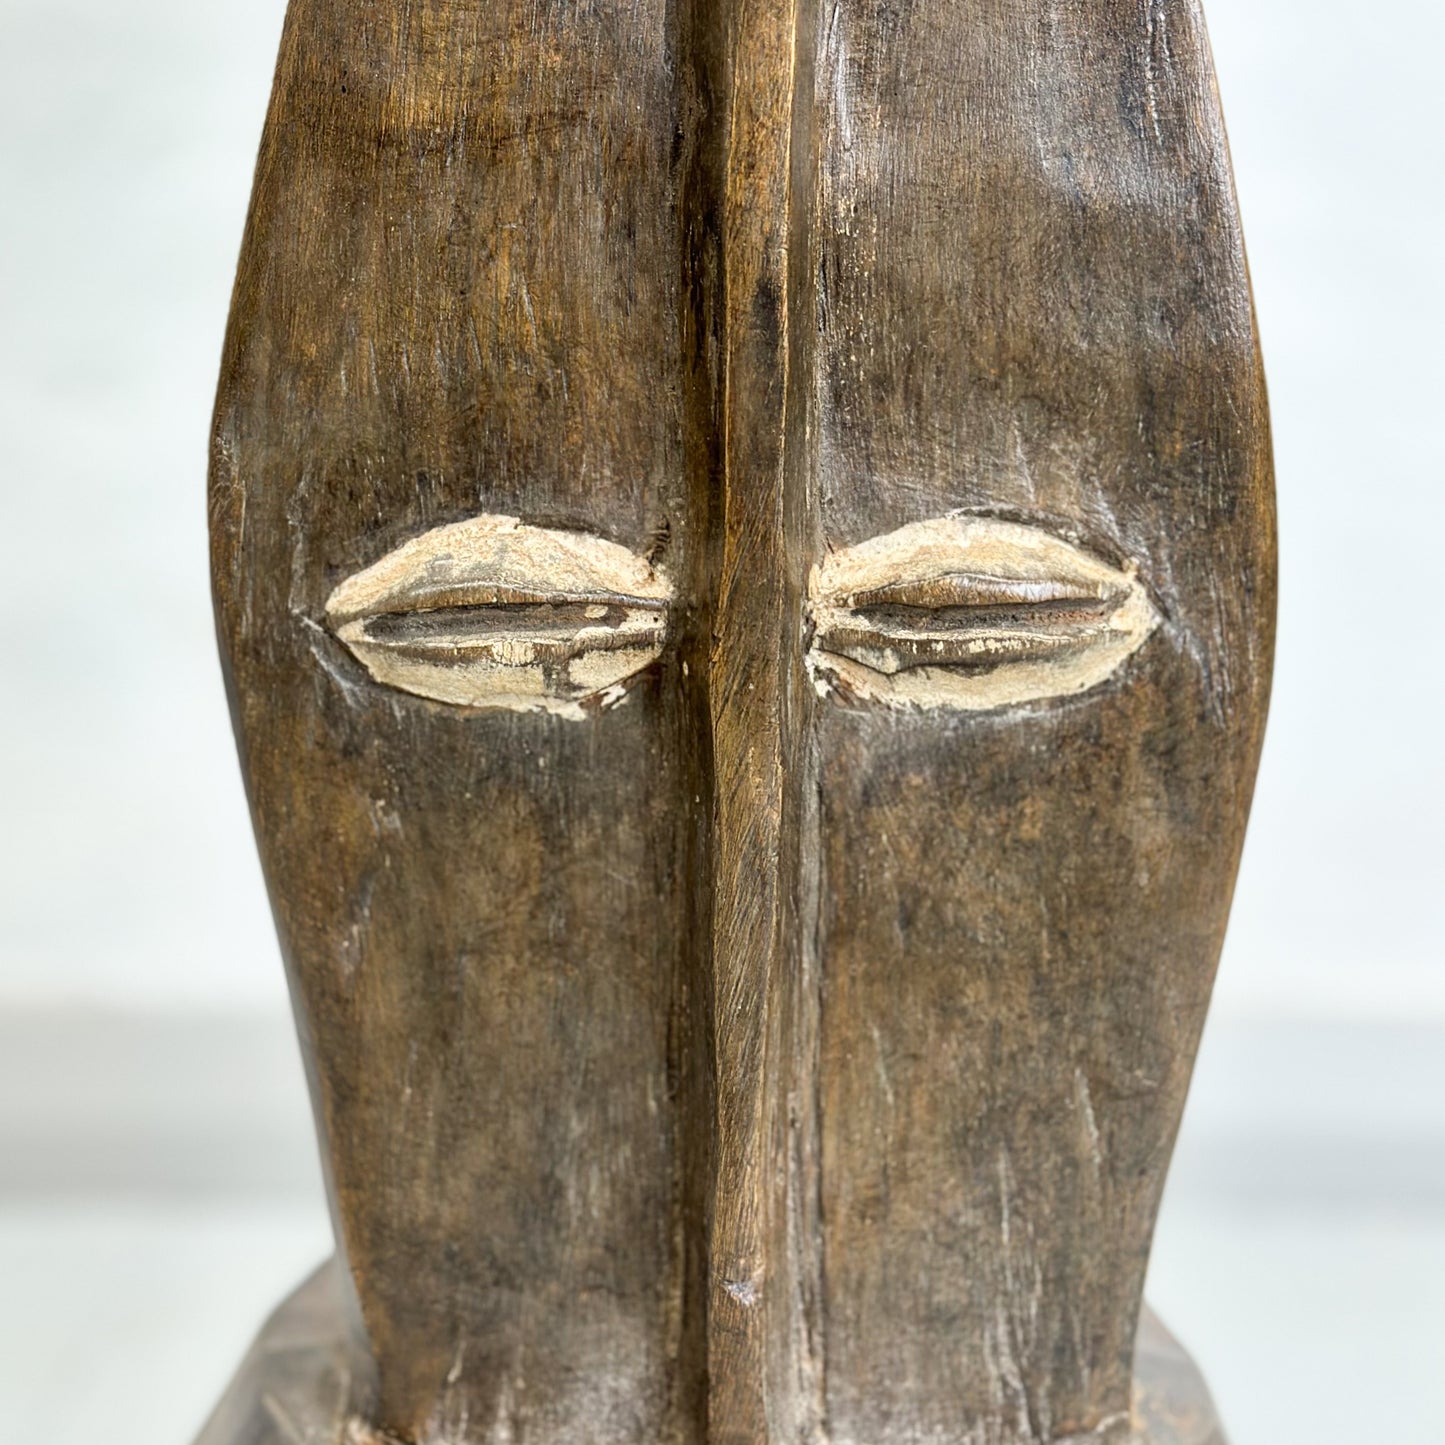 Vintage Baule Stool with Face - Ivory Coast